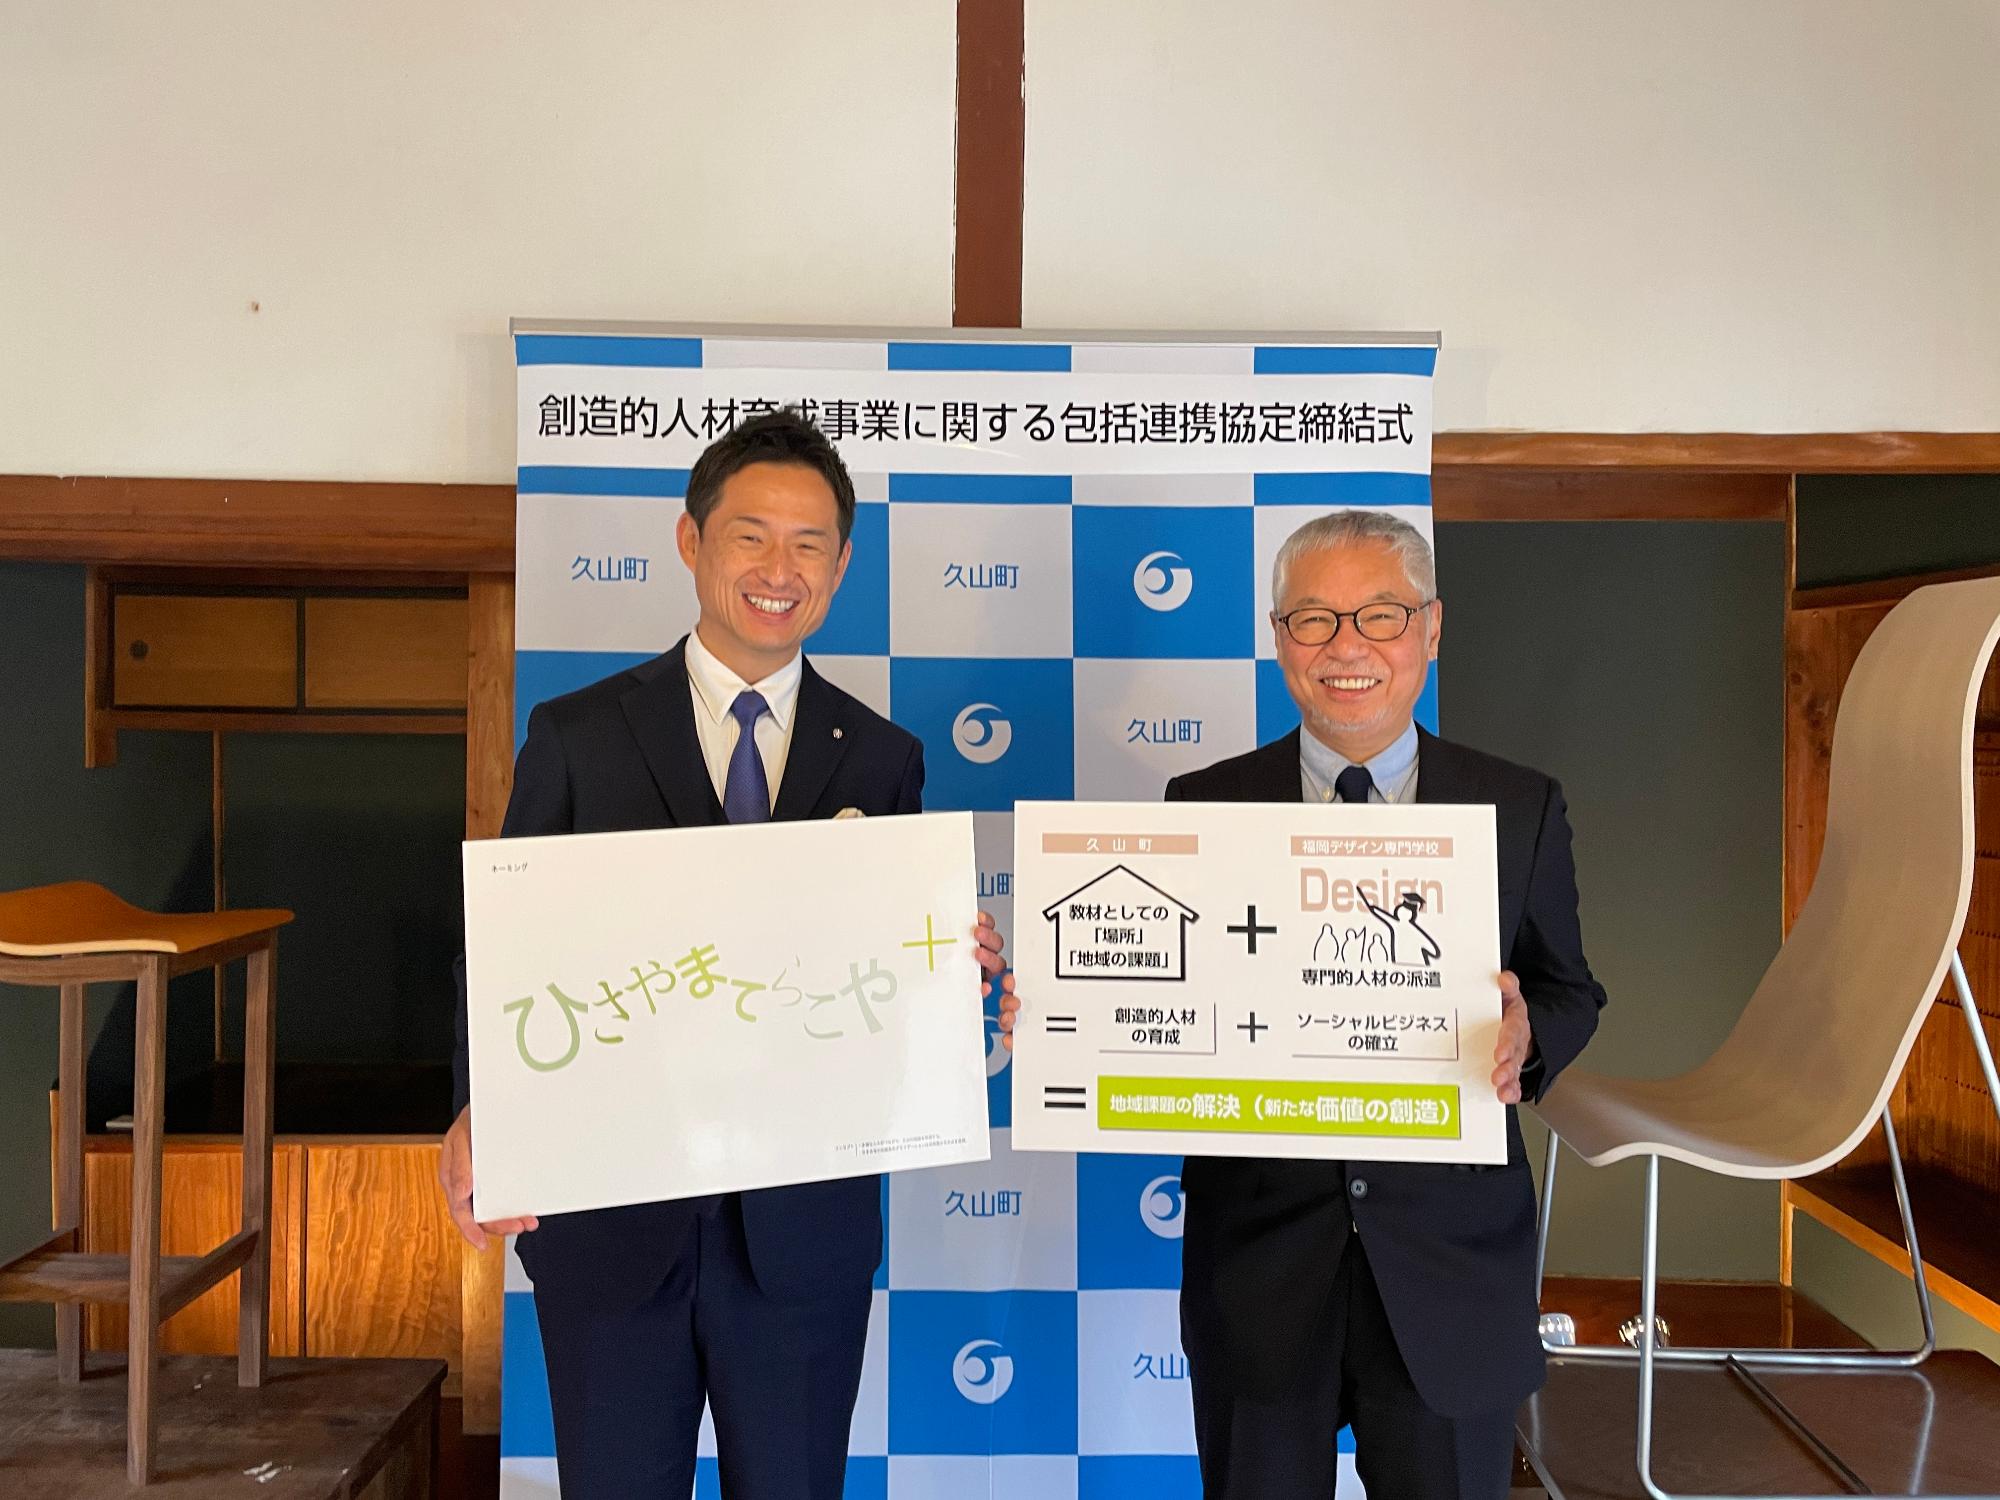 左から西村 勝町長、福岡デザイン専門学校 佐藤 俊郎理事長